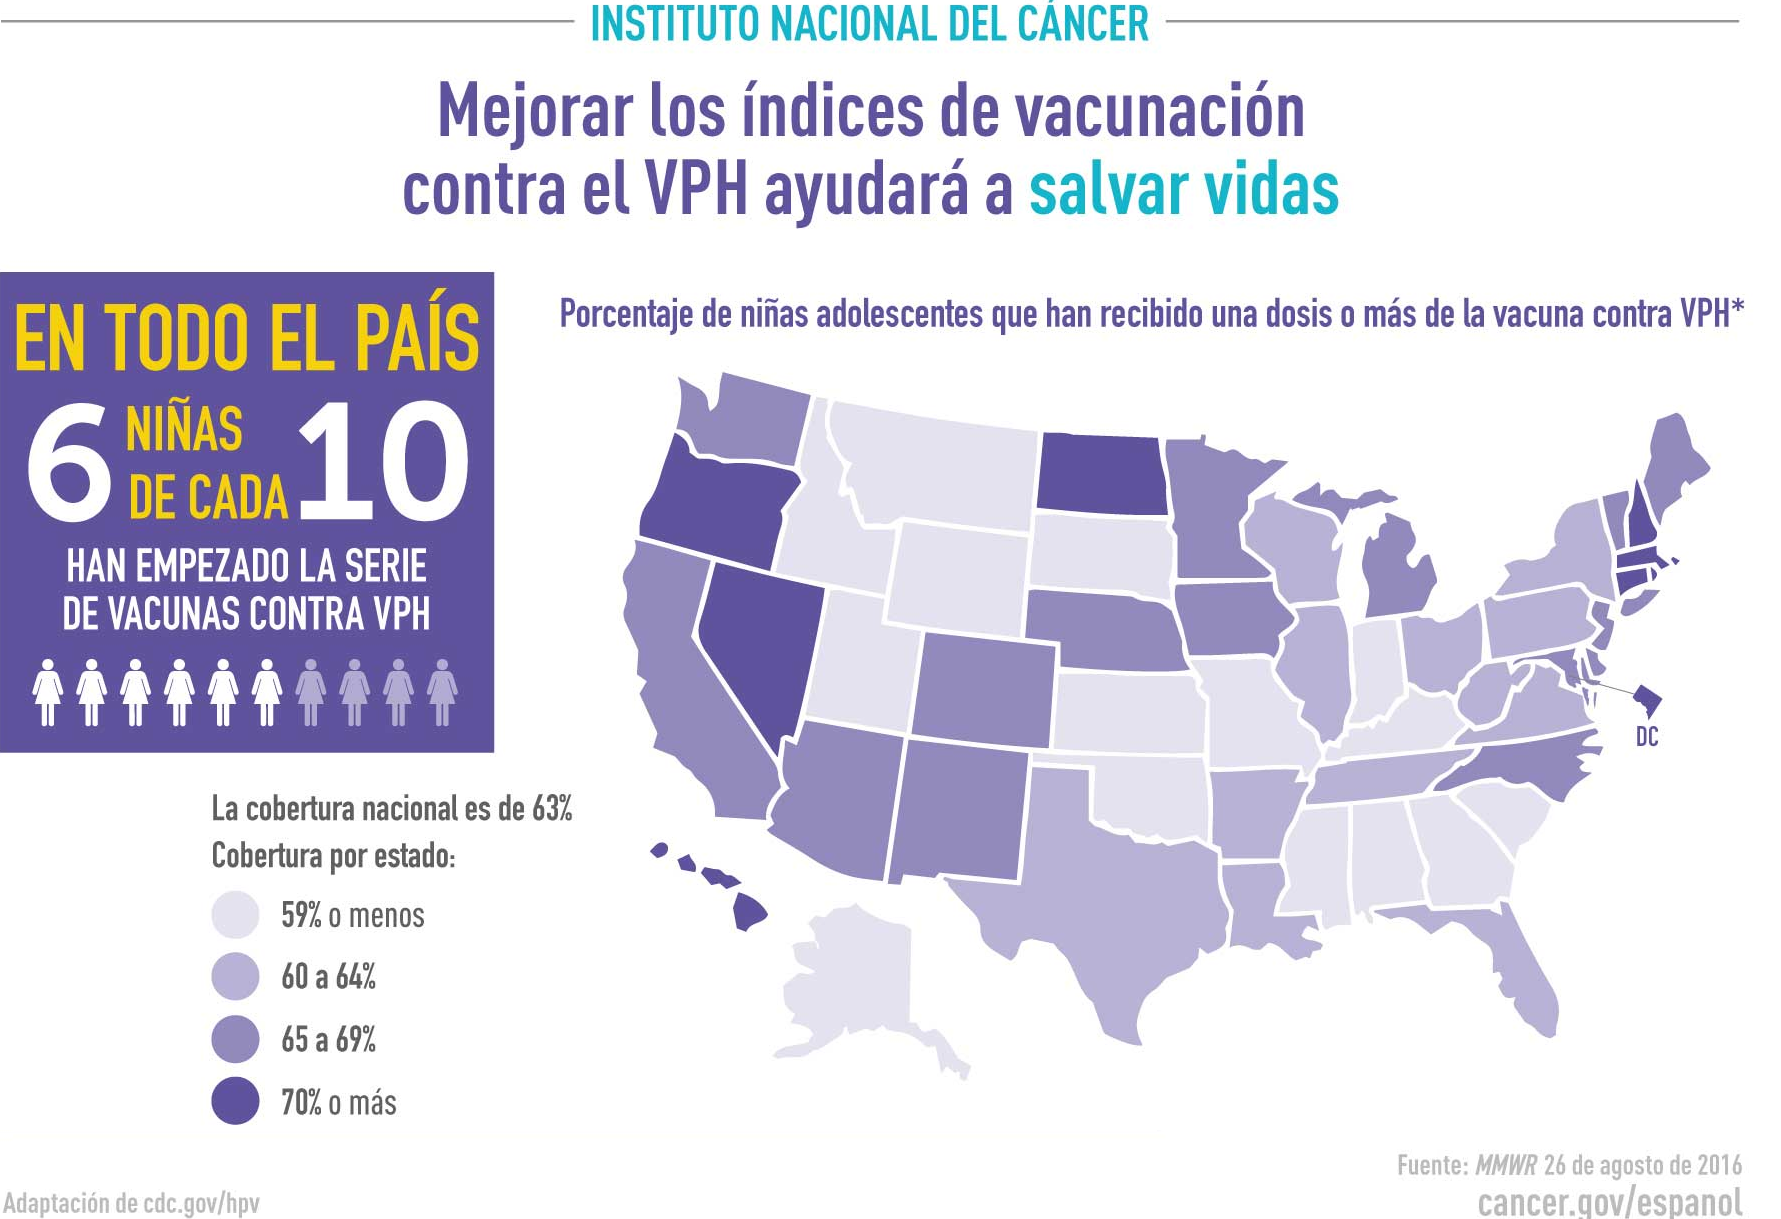 hpv-vaccine-uptake-infographic-espanol.__v1002641021.png